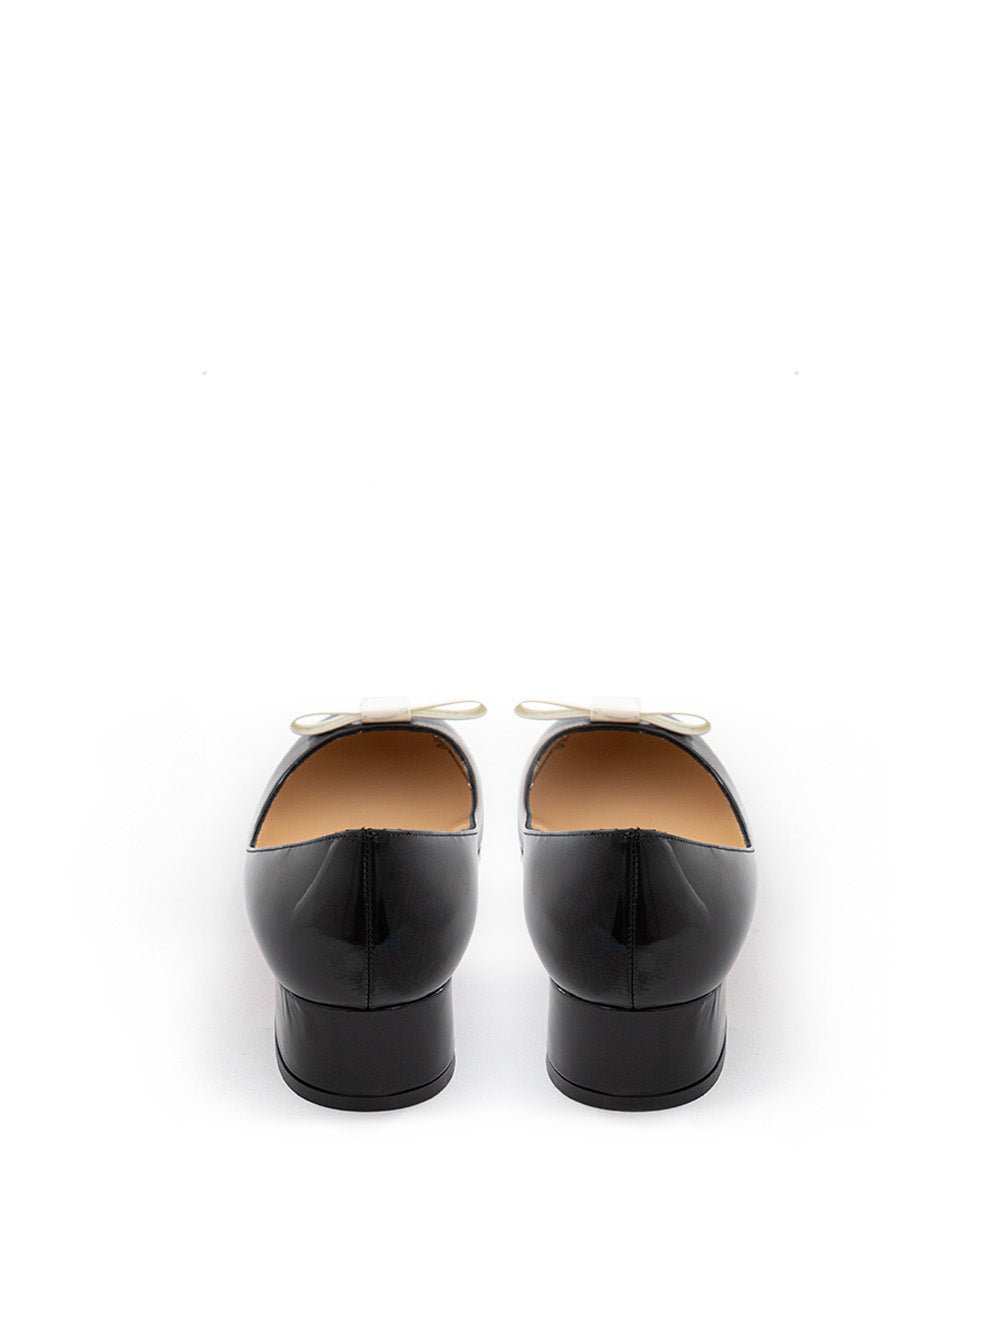 Elegant Black Patent Leather Ballet Flats